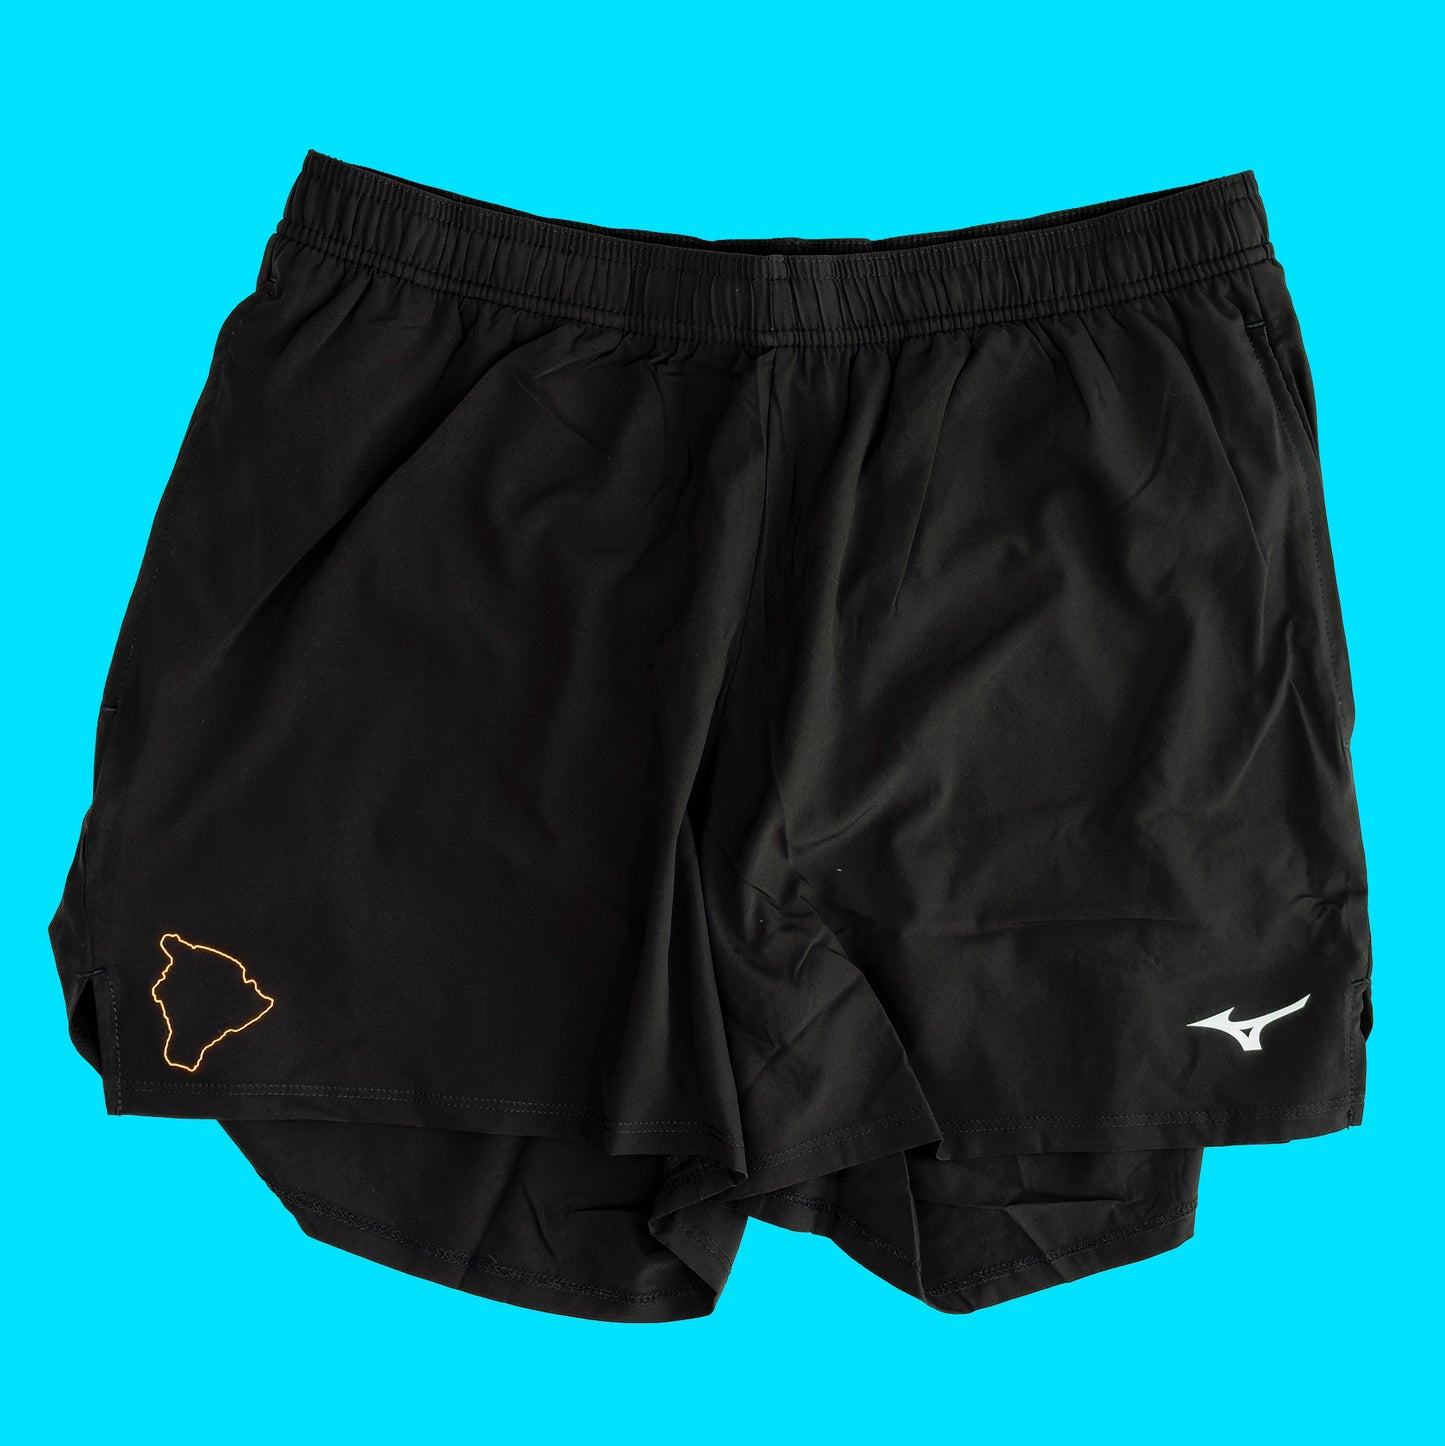 Men's Infinity Shorts - 5"